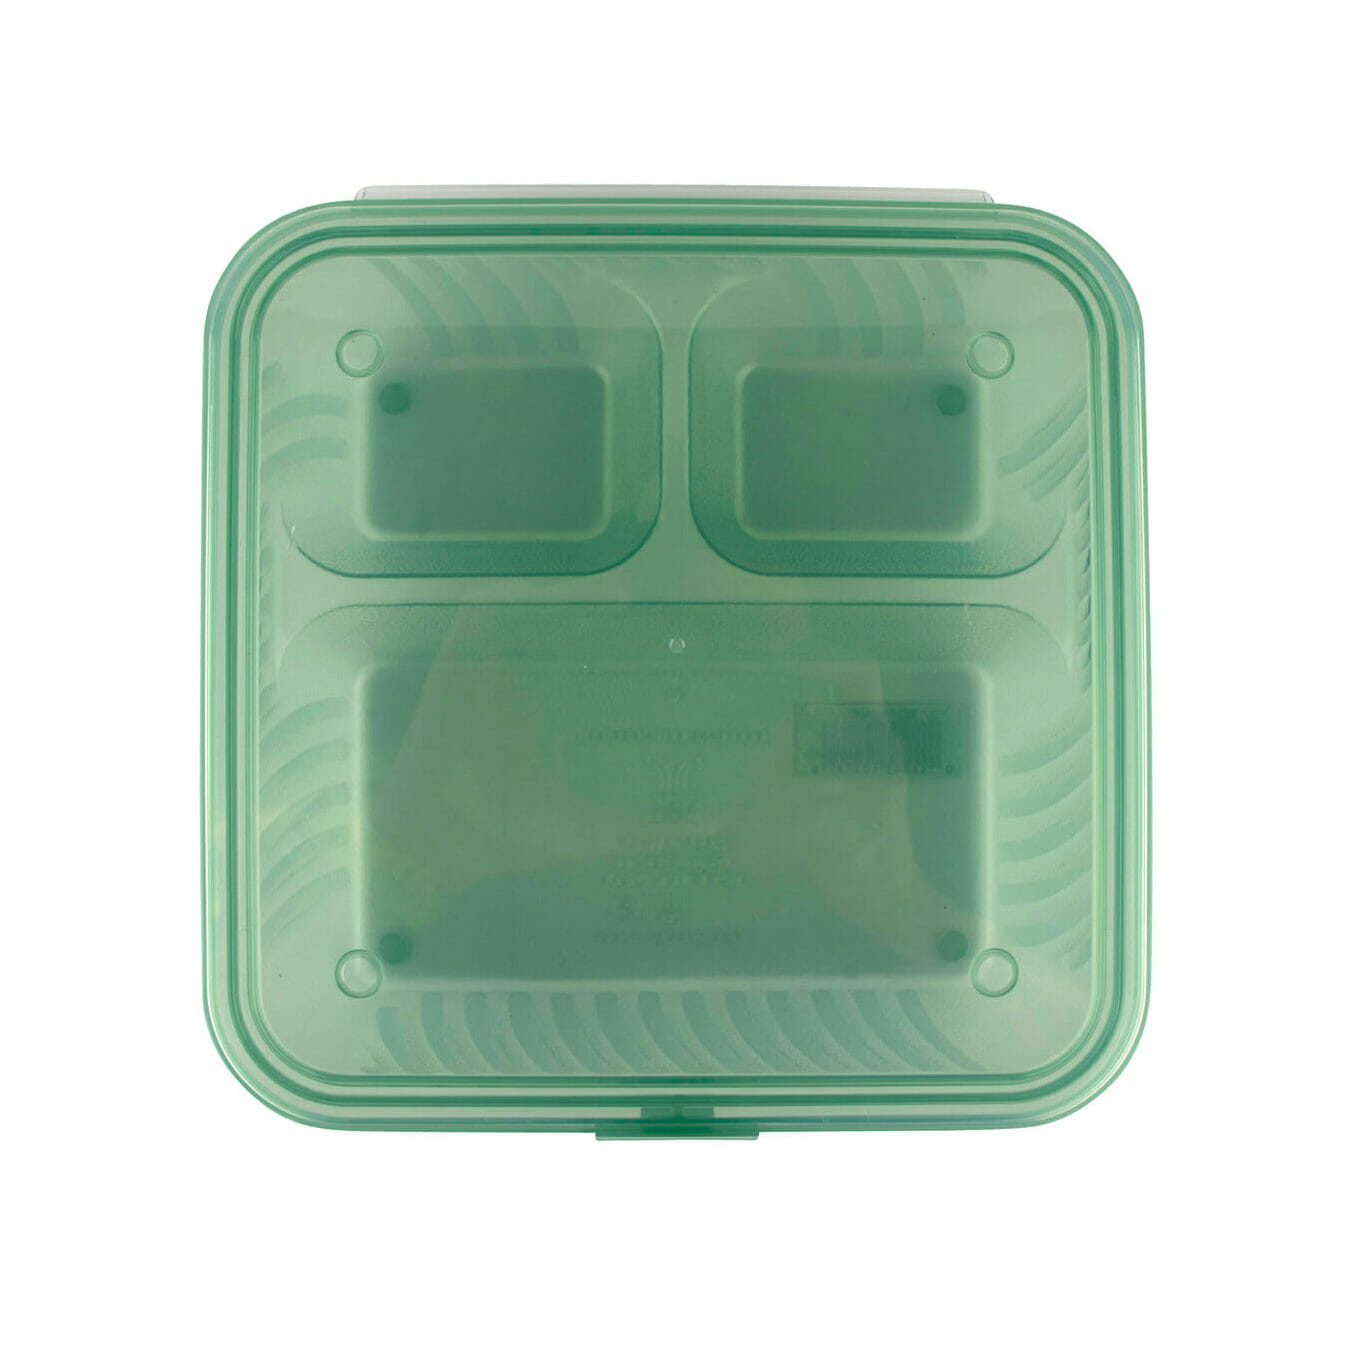 GET EC-11-1 Reusable 1 Compartment Leak Resistant Food Containers 12/Case